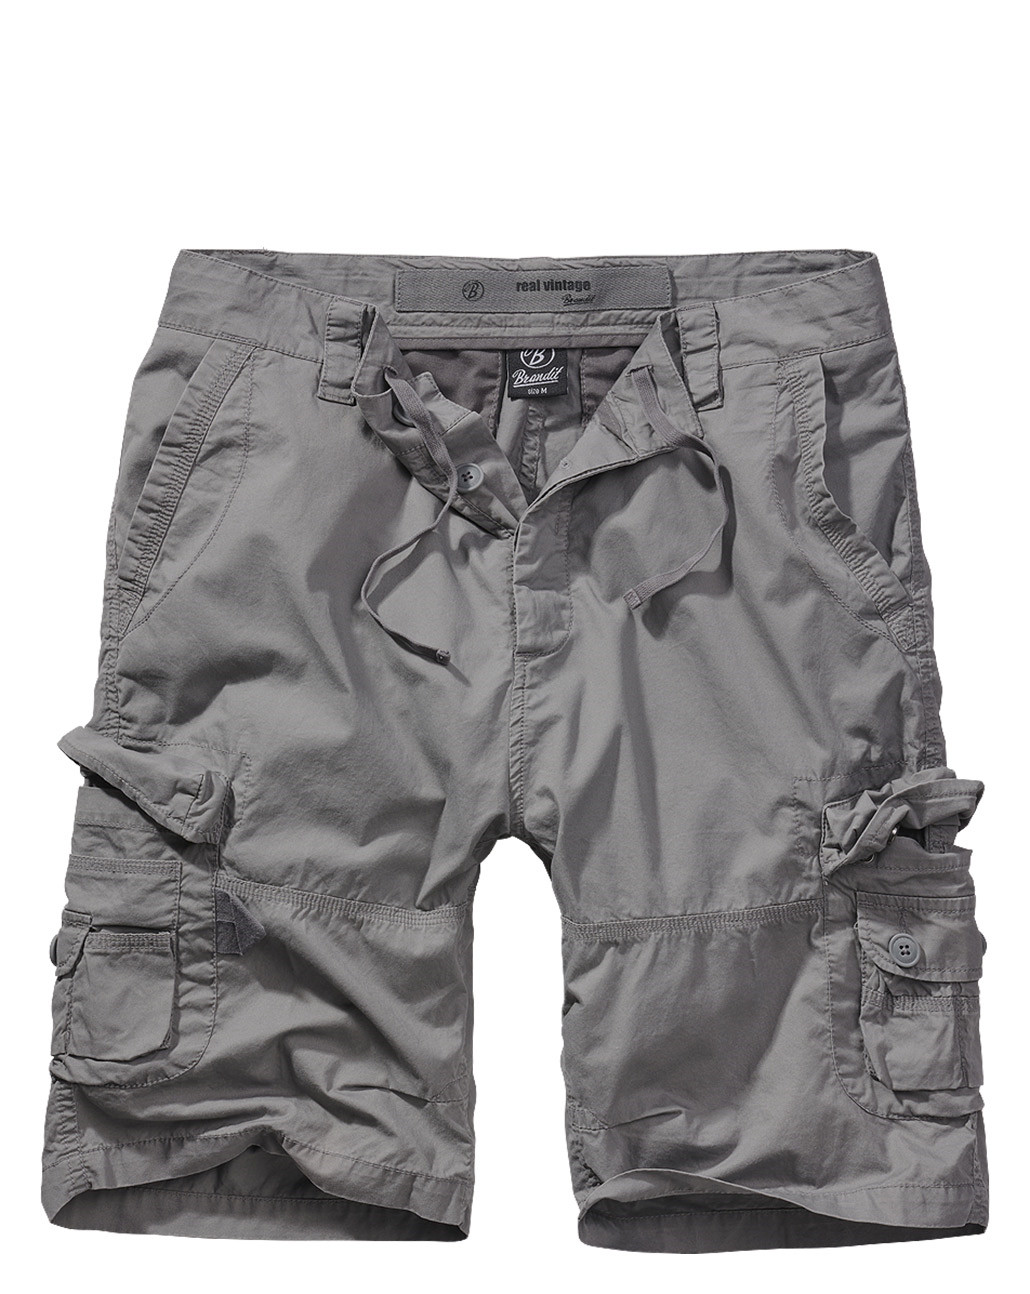 Brandit Ty Shorts (Charcoal, 3XL)